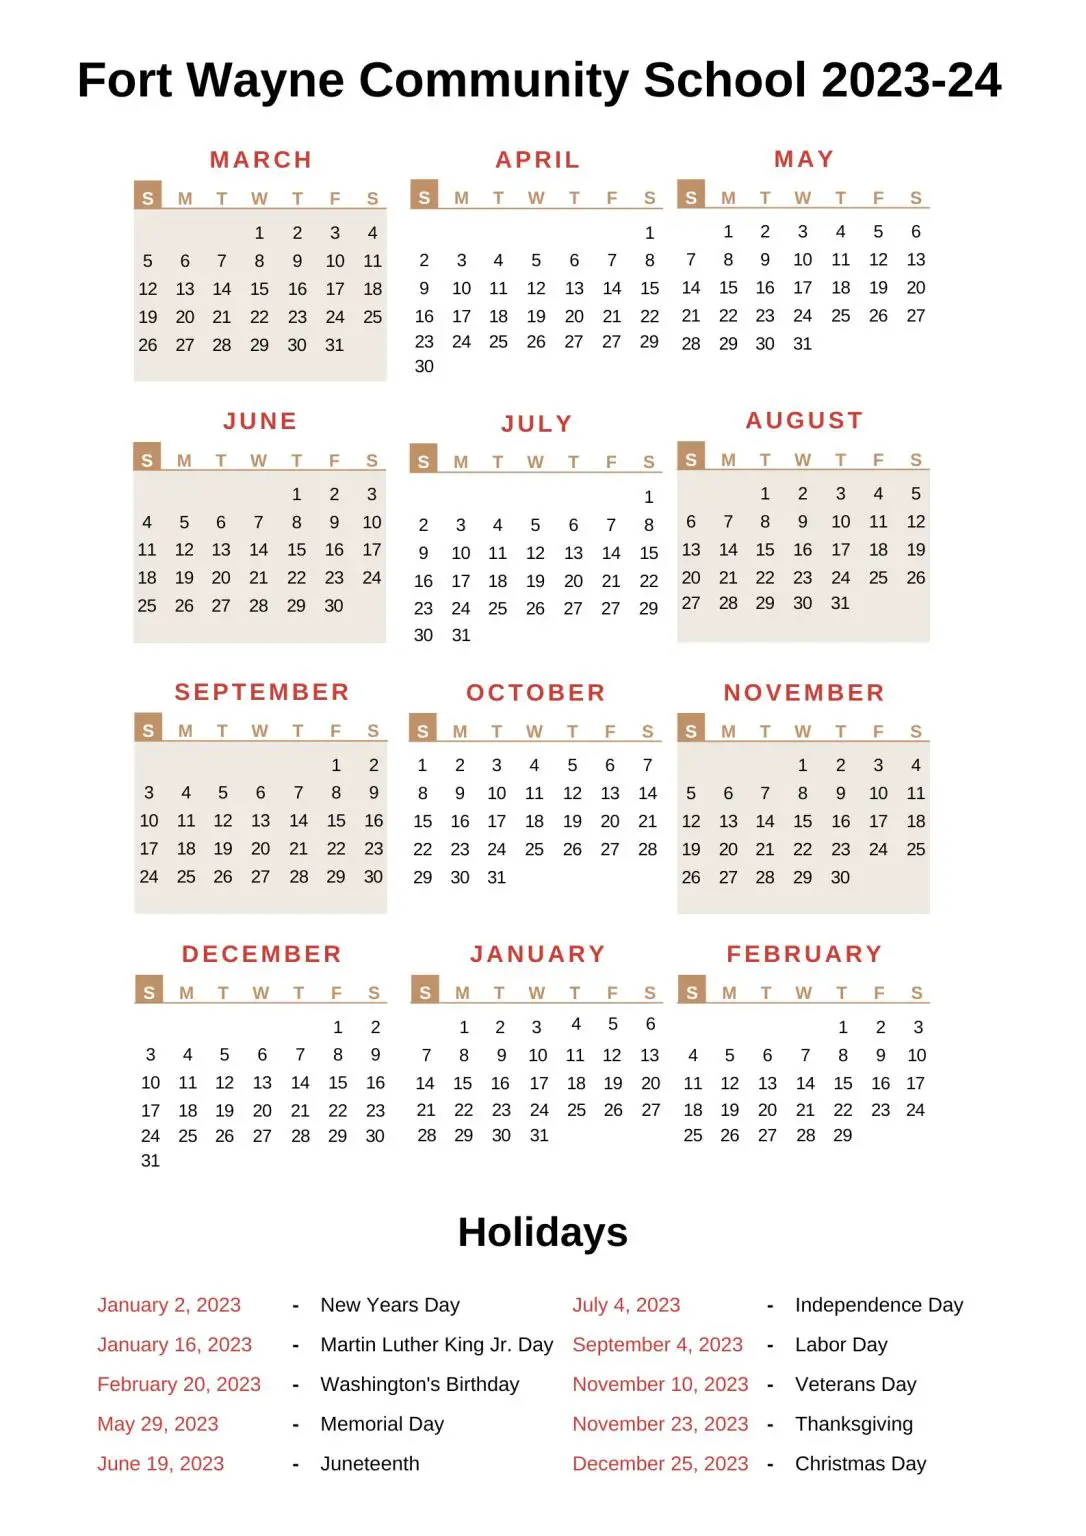 Fort Wayne Community Schools Calendar 202324 With Holidays